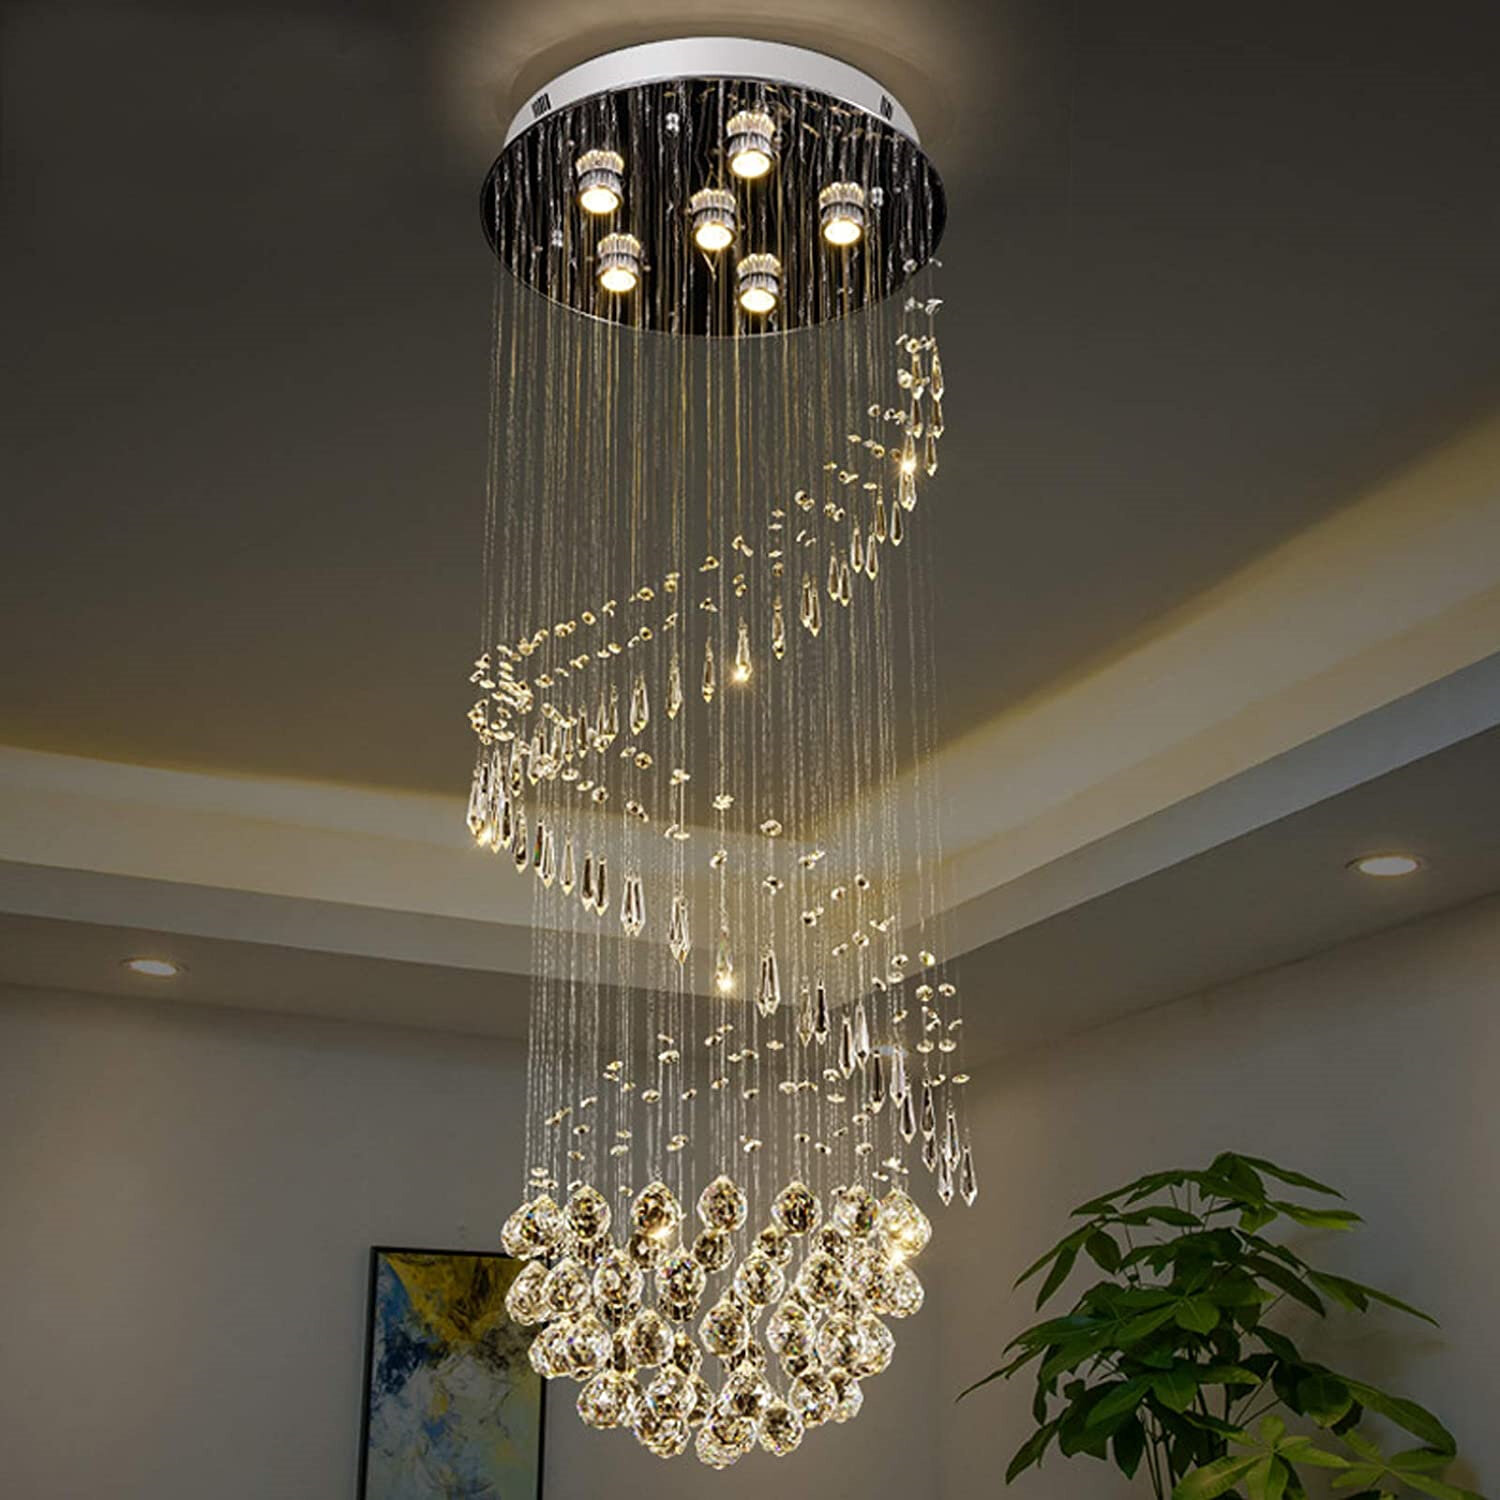 Modern Ceiling Chandelier Light Lamp Shade Pendant Raindrop Crystal Droplets 